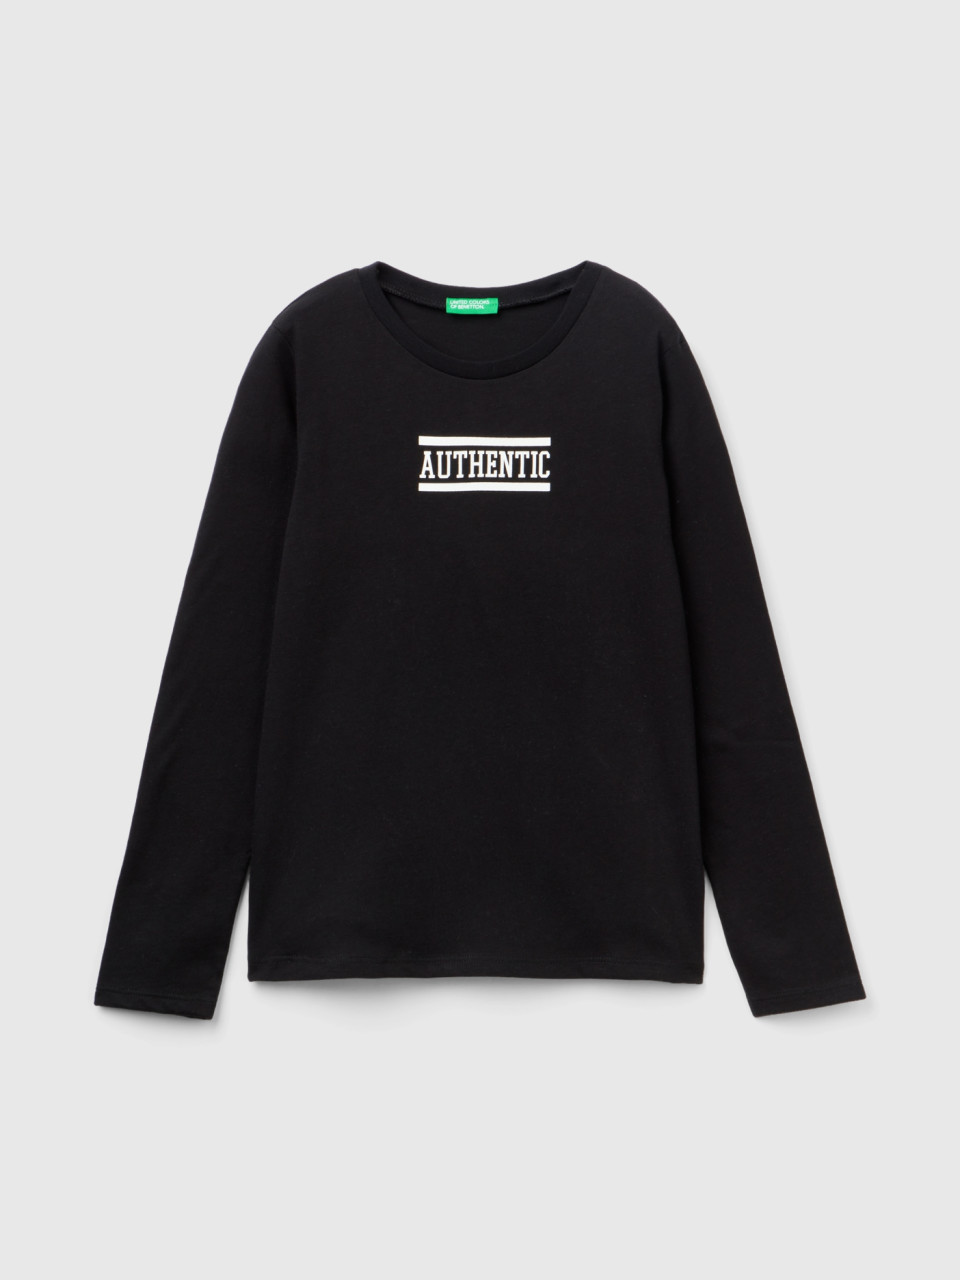 Benetton, T-shirt With Text Print, Black, Kids